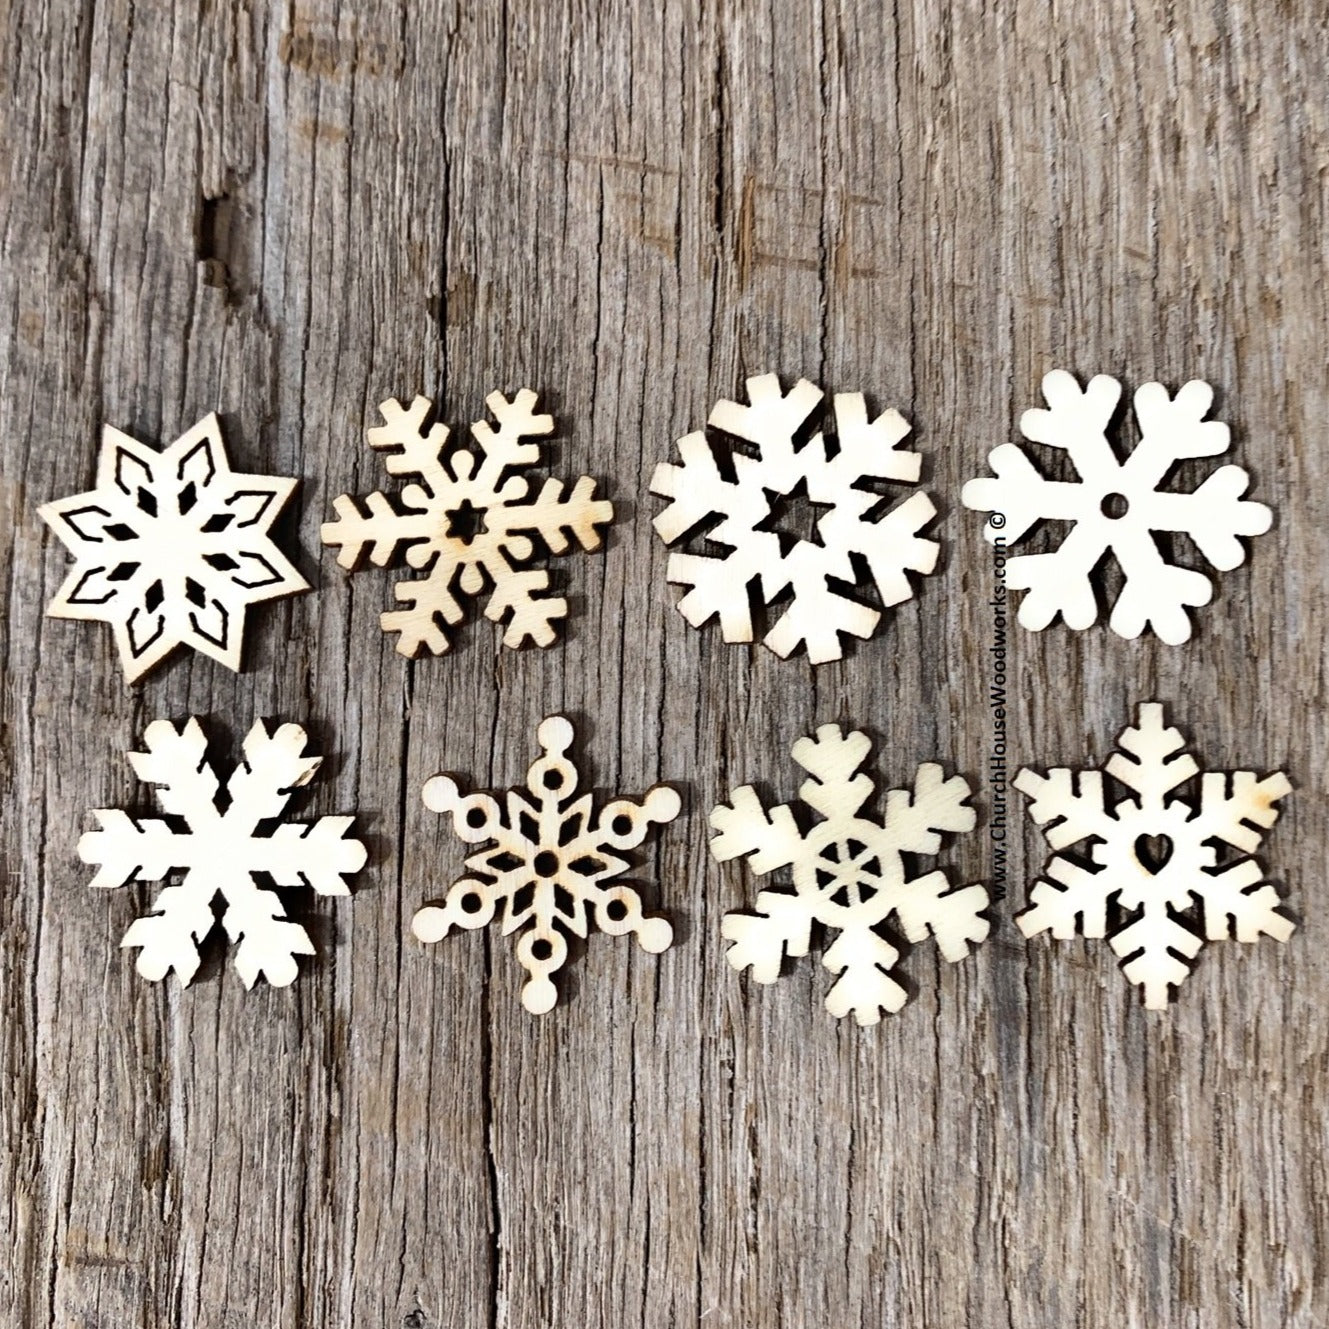 DIY Wood Snowflake Ornament Supplies – Church House Woodworks